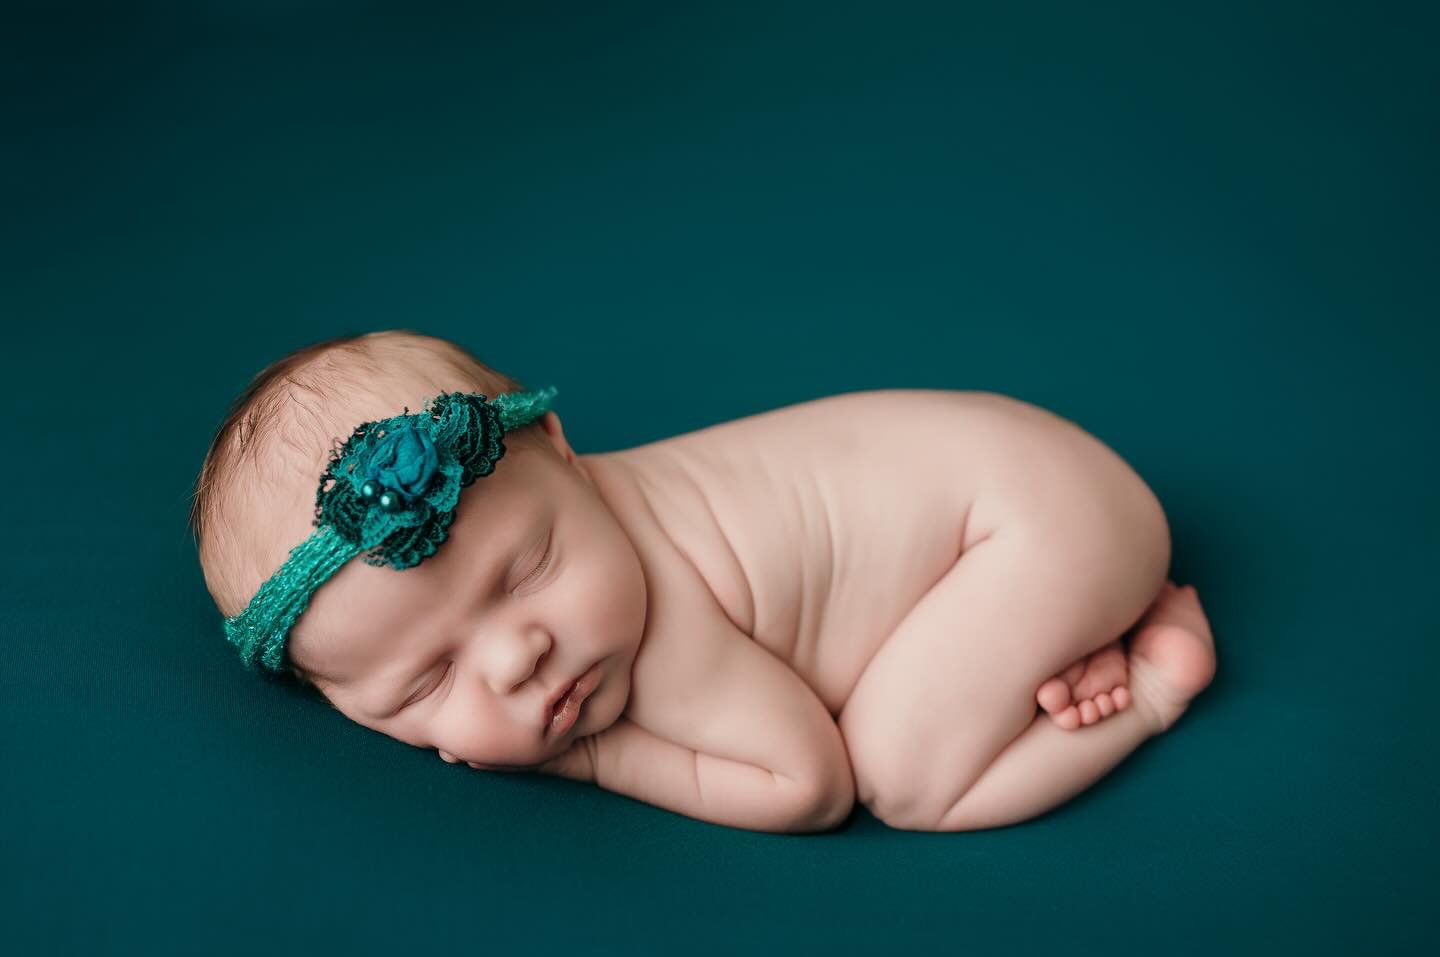 Sleep like a baby? Miss Isla Rose sure did!! A perfect tired newborn.